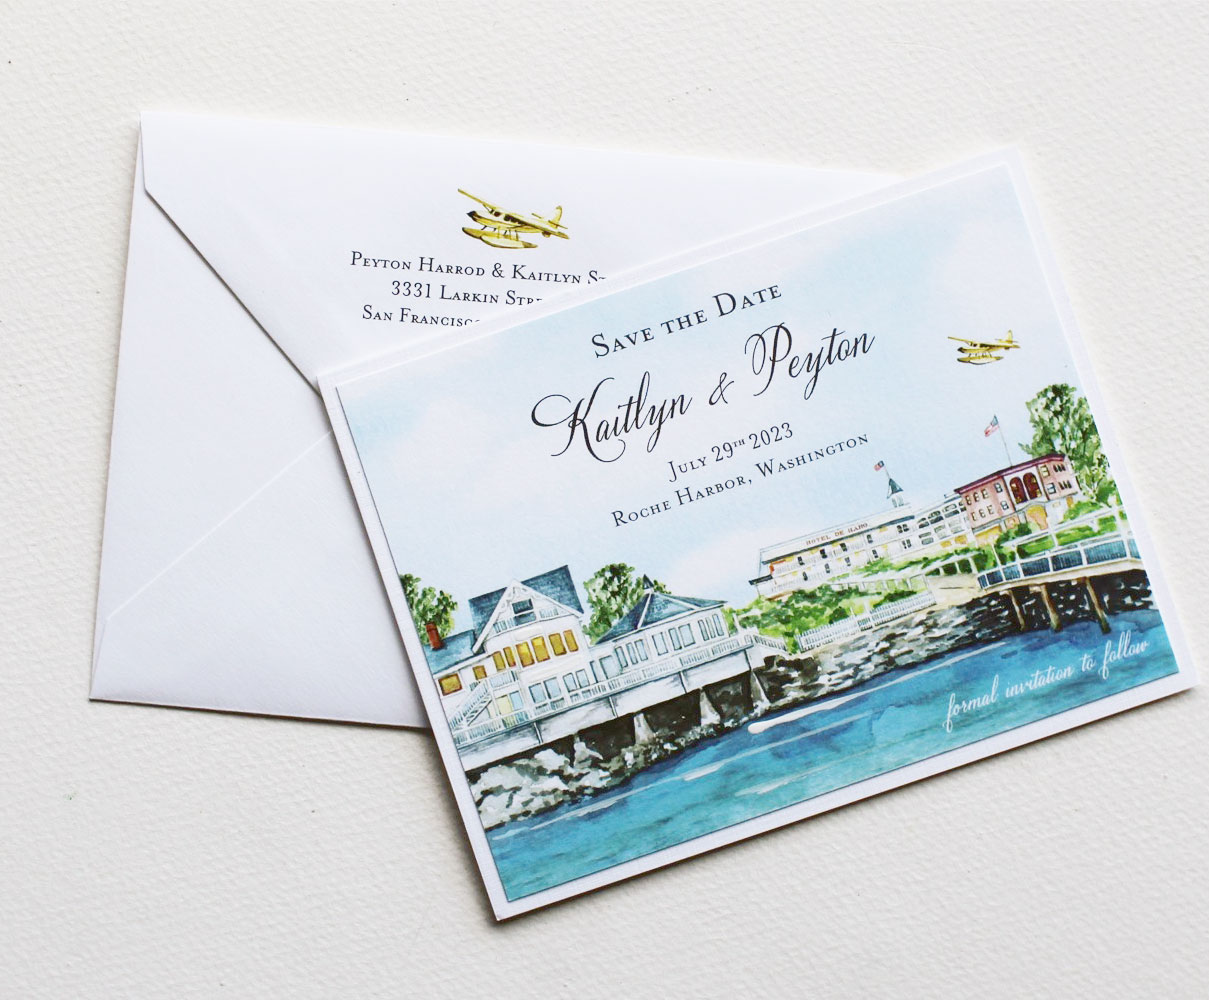 roche-harbor-pacific-northwest-wedding-invitations